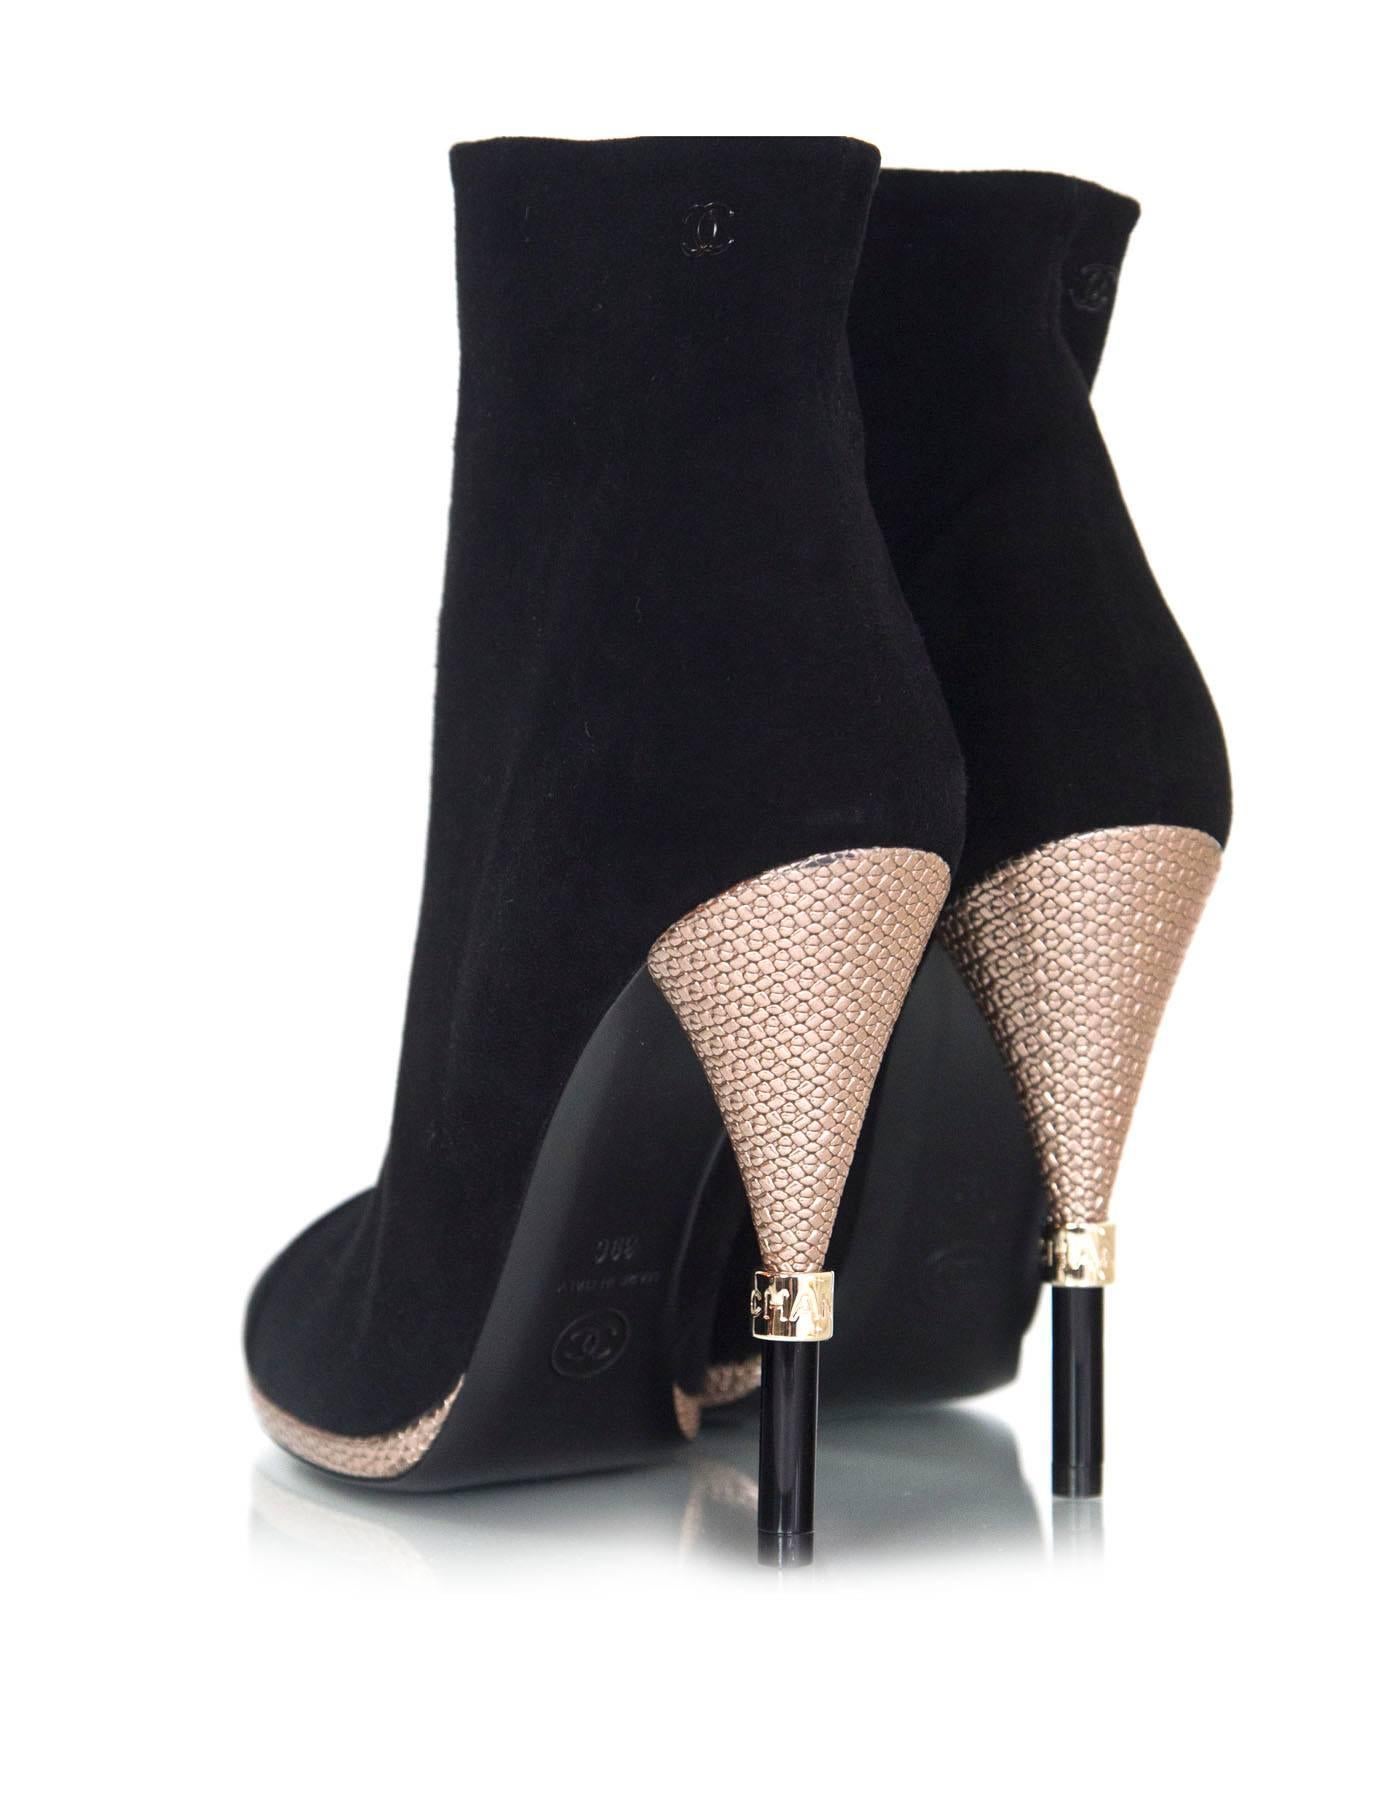 Women's Chanel Black Suede & Satin Cap-Toe Ankle Boots Sz 39C NEW